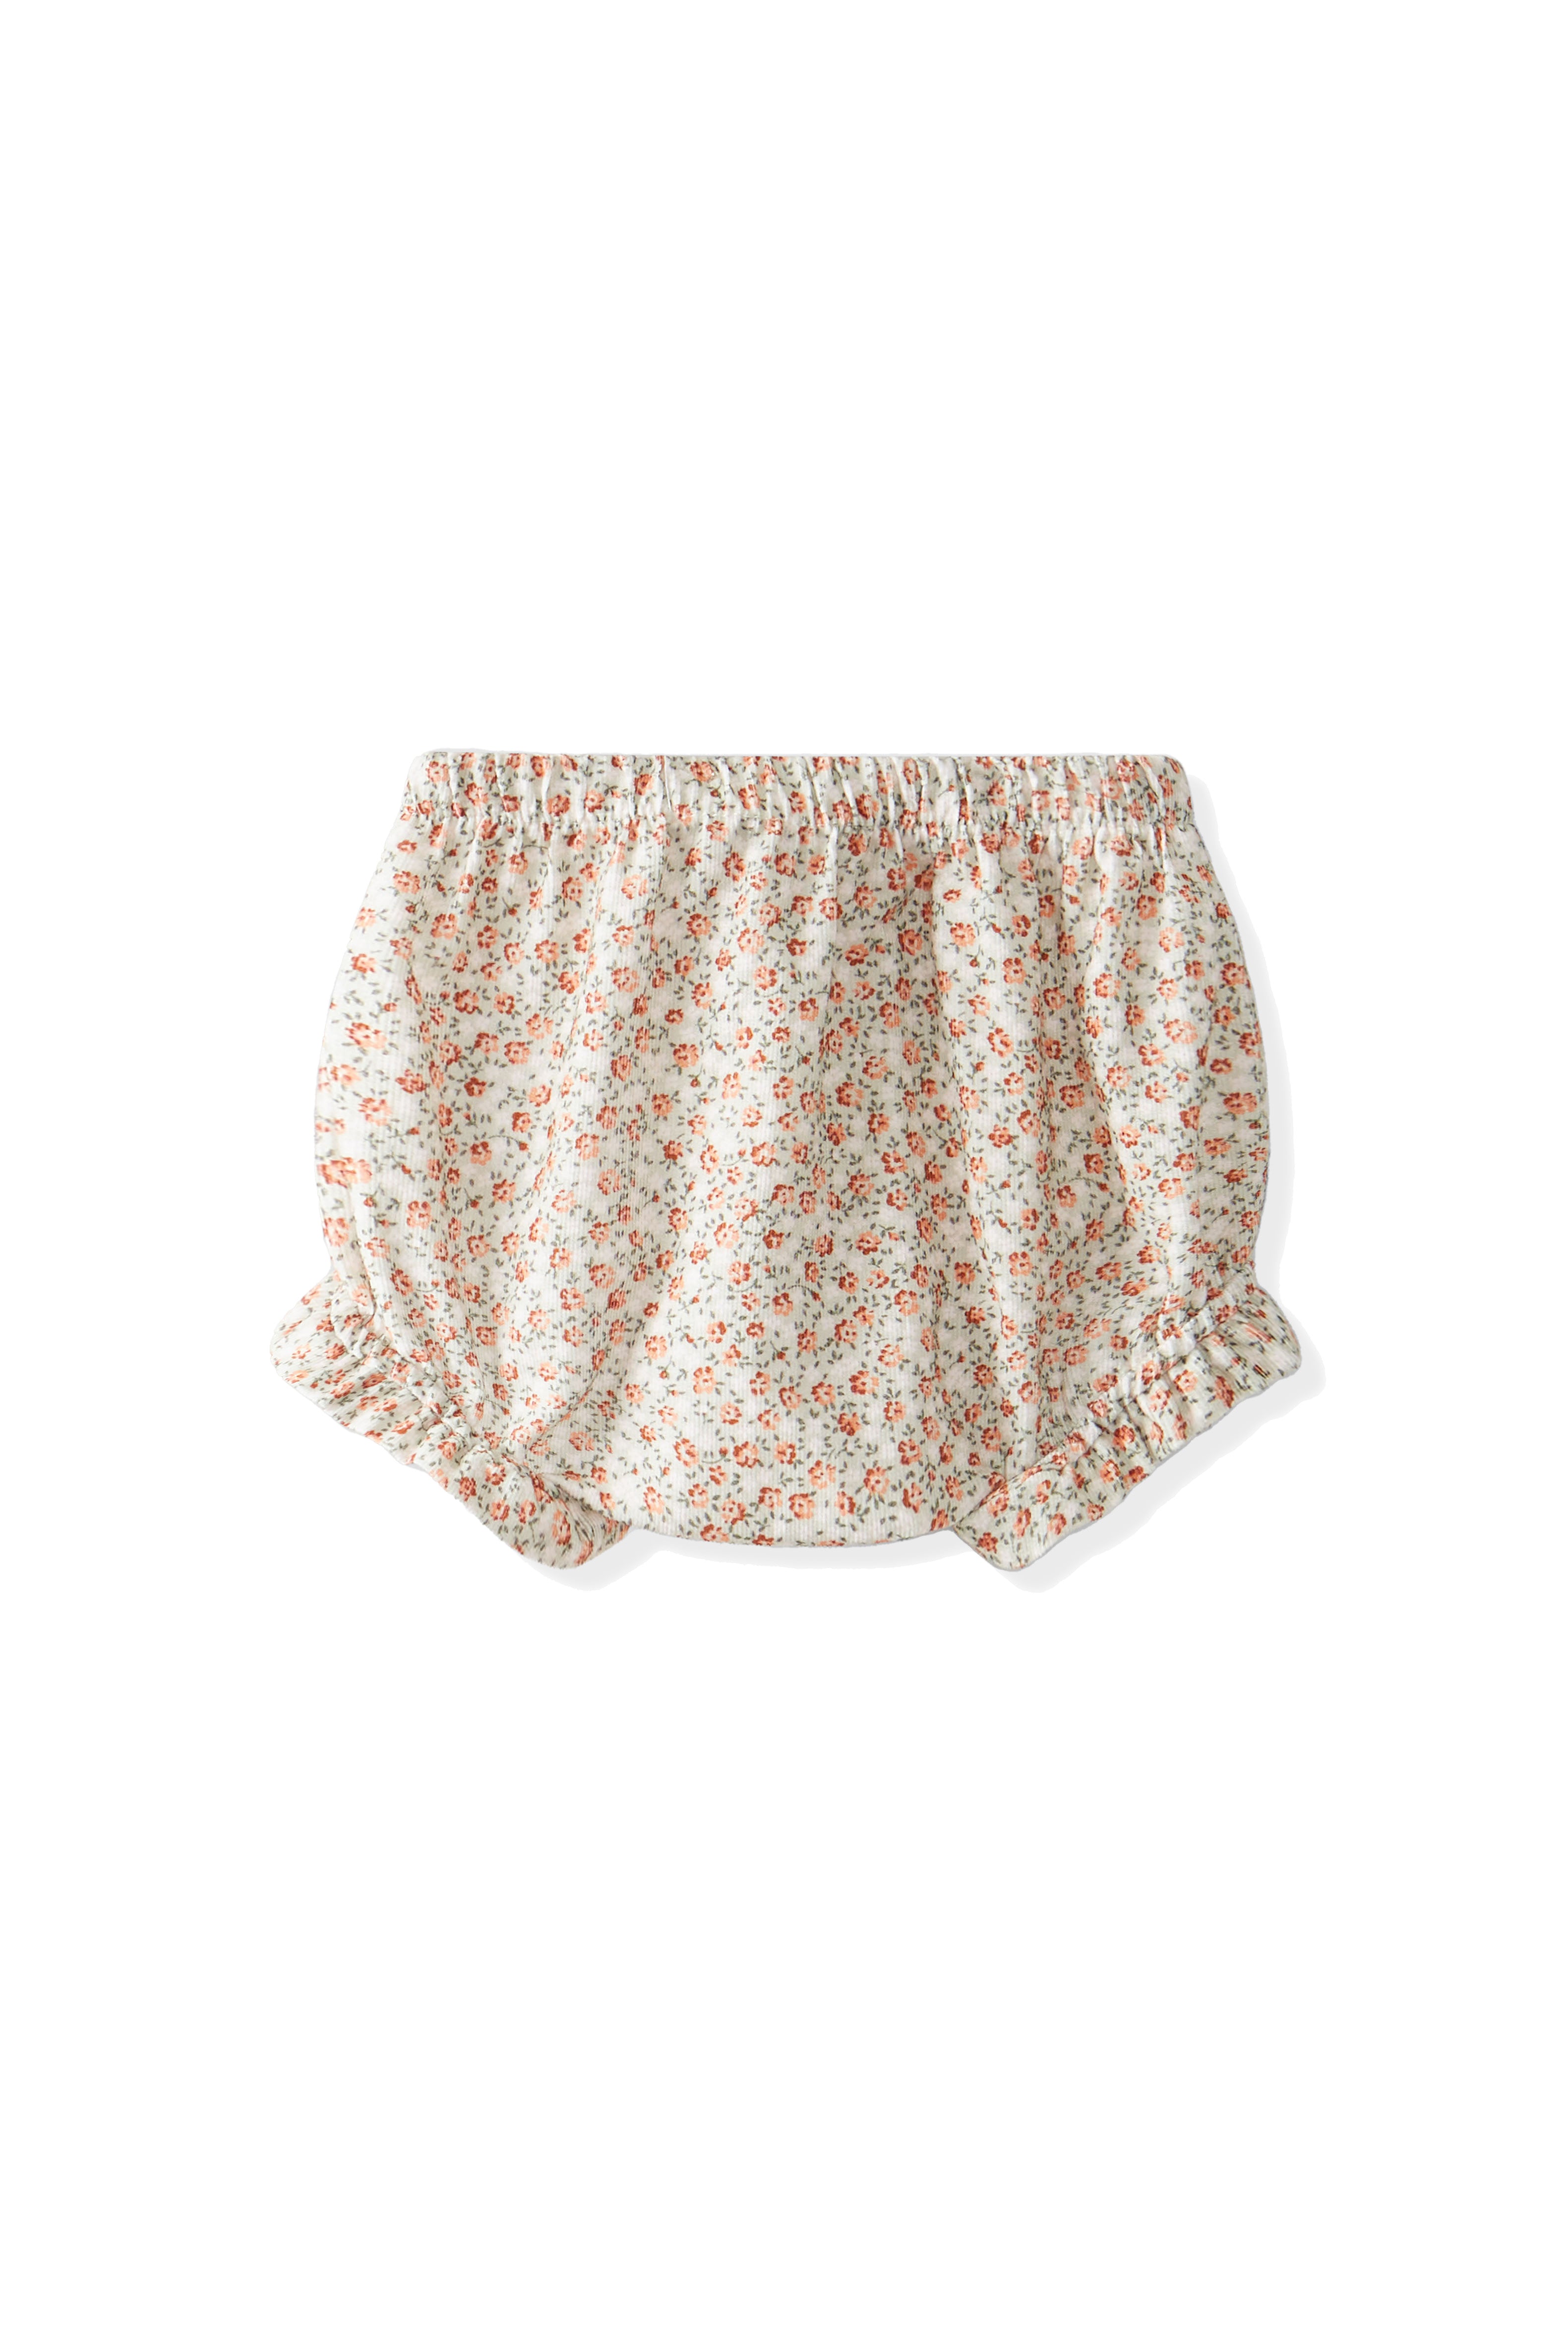 Laranjinha shorts in flower print